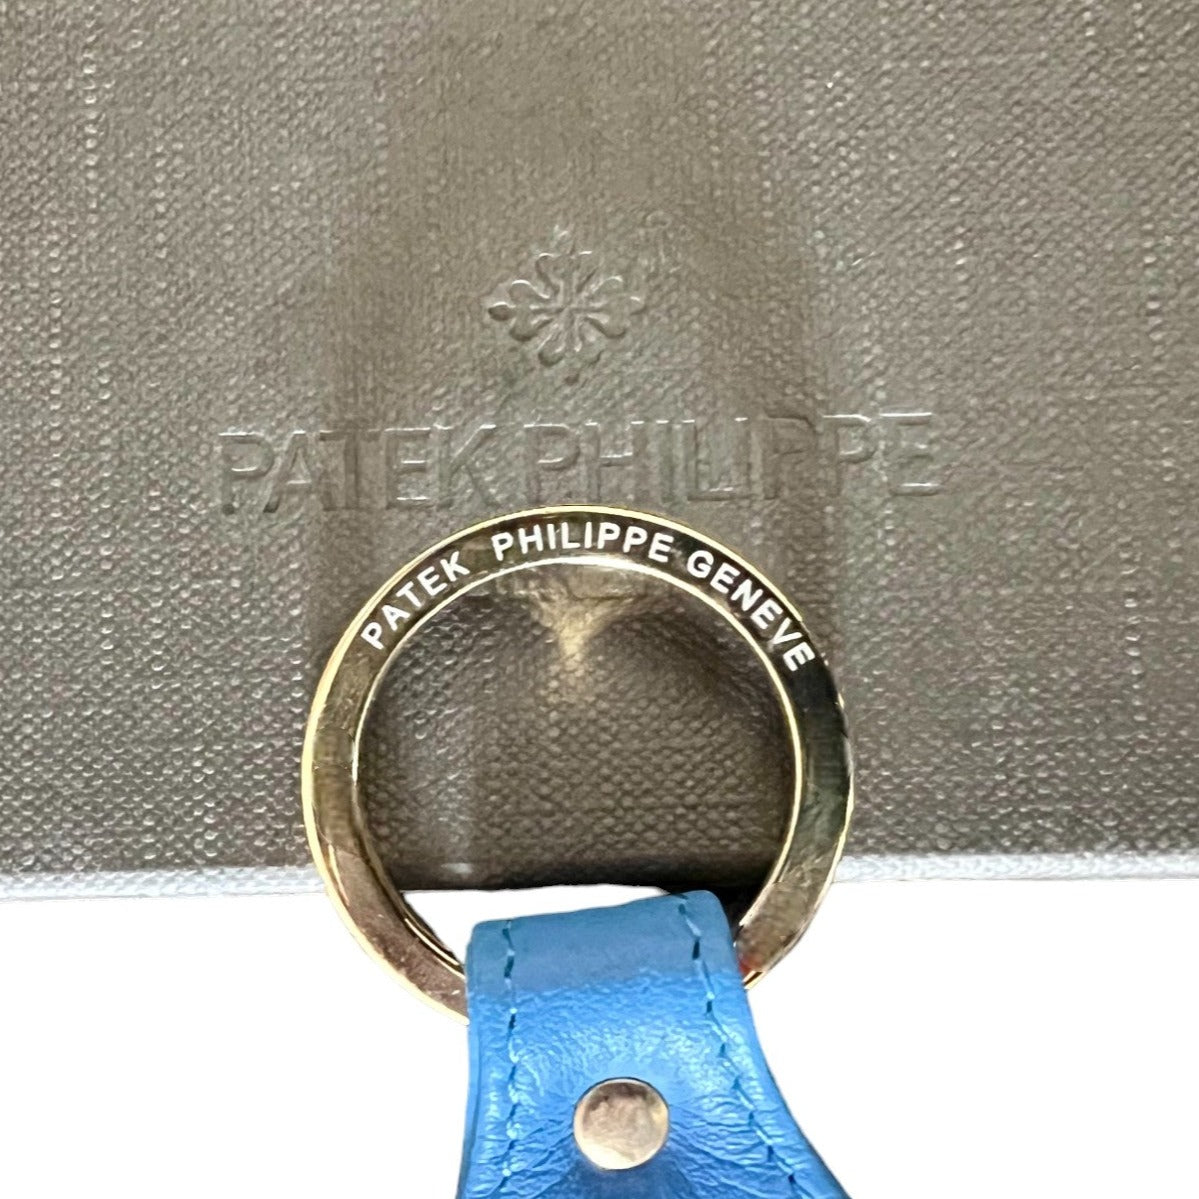 Patek Philippe New Leather Key Holder